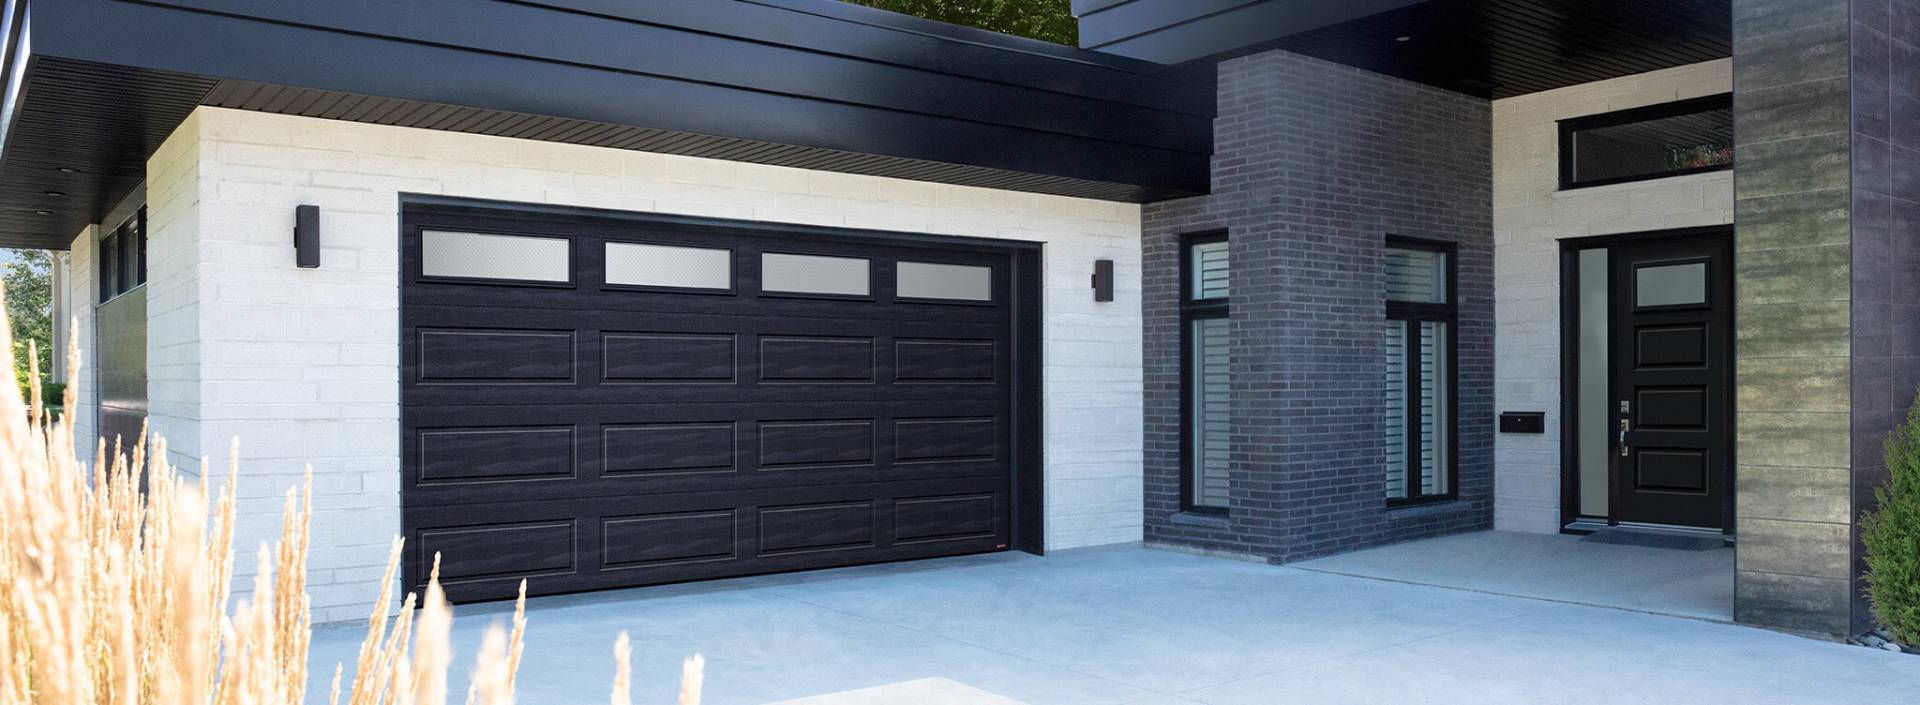 Residential garage doors